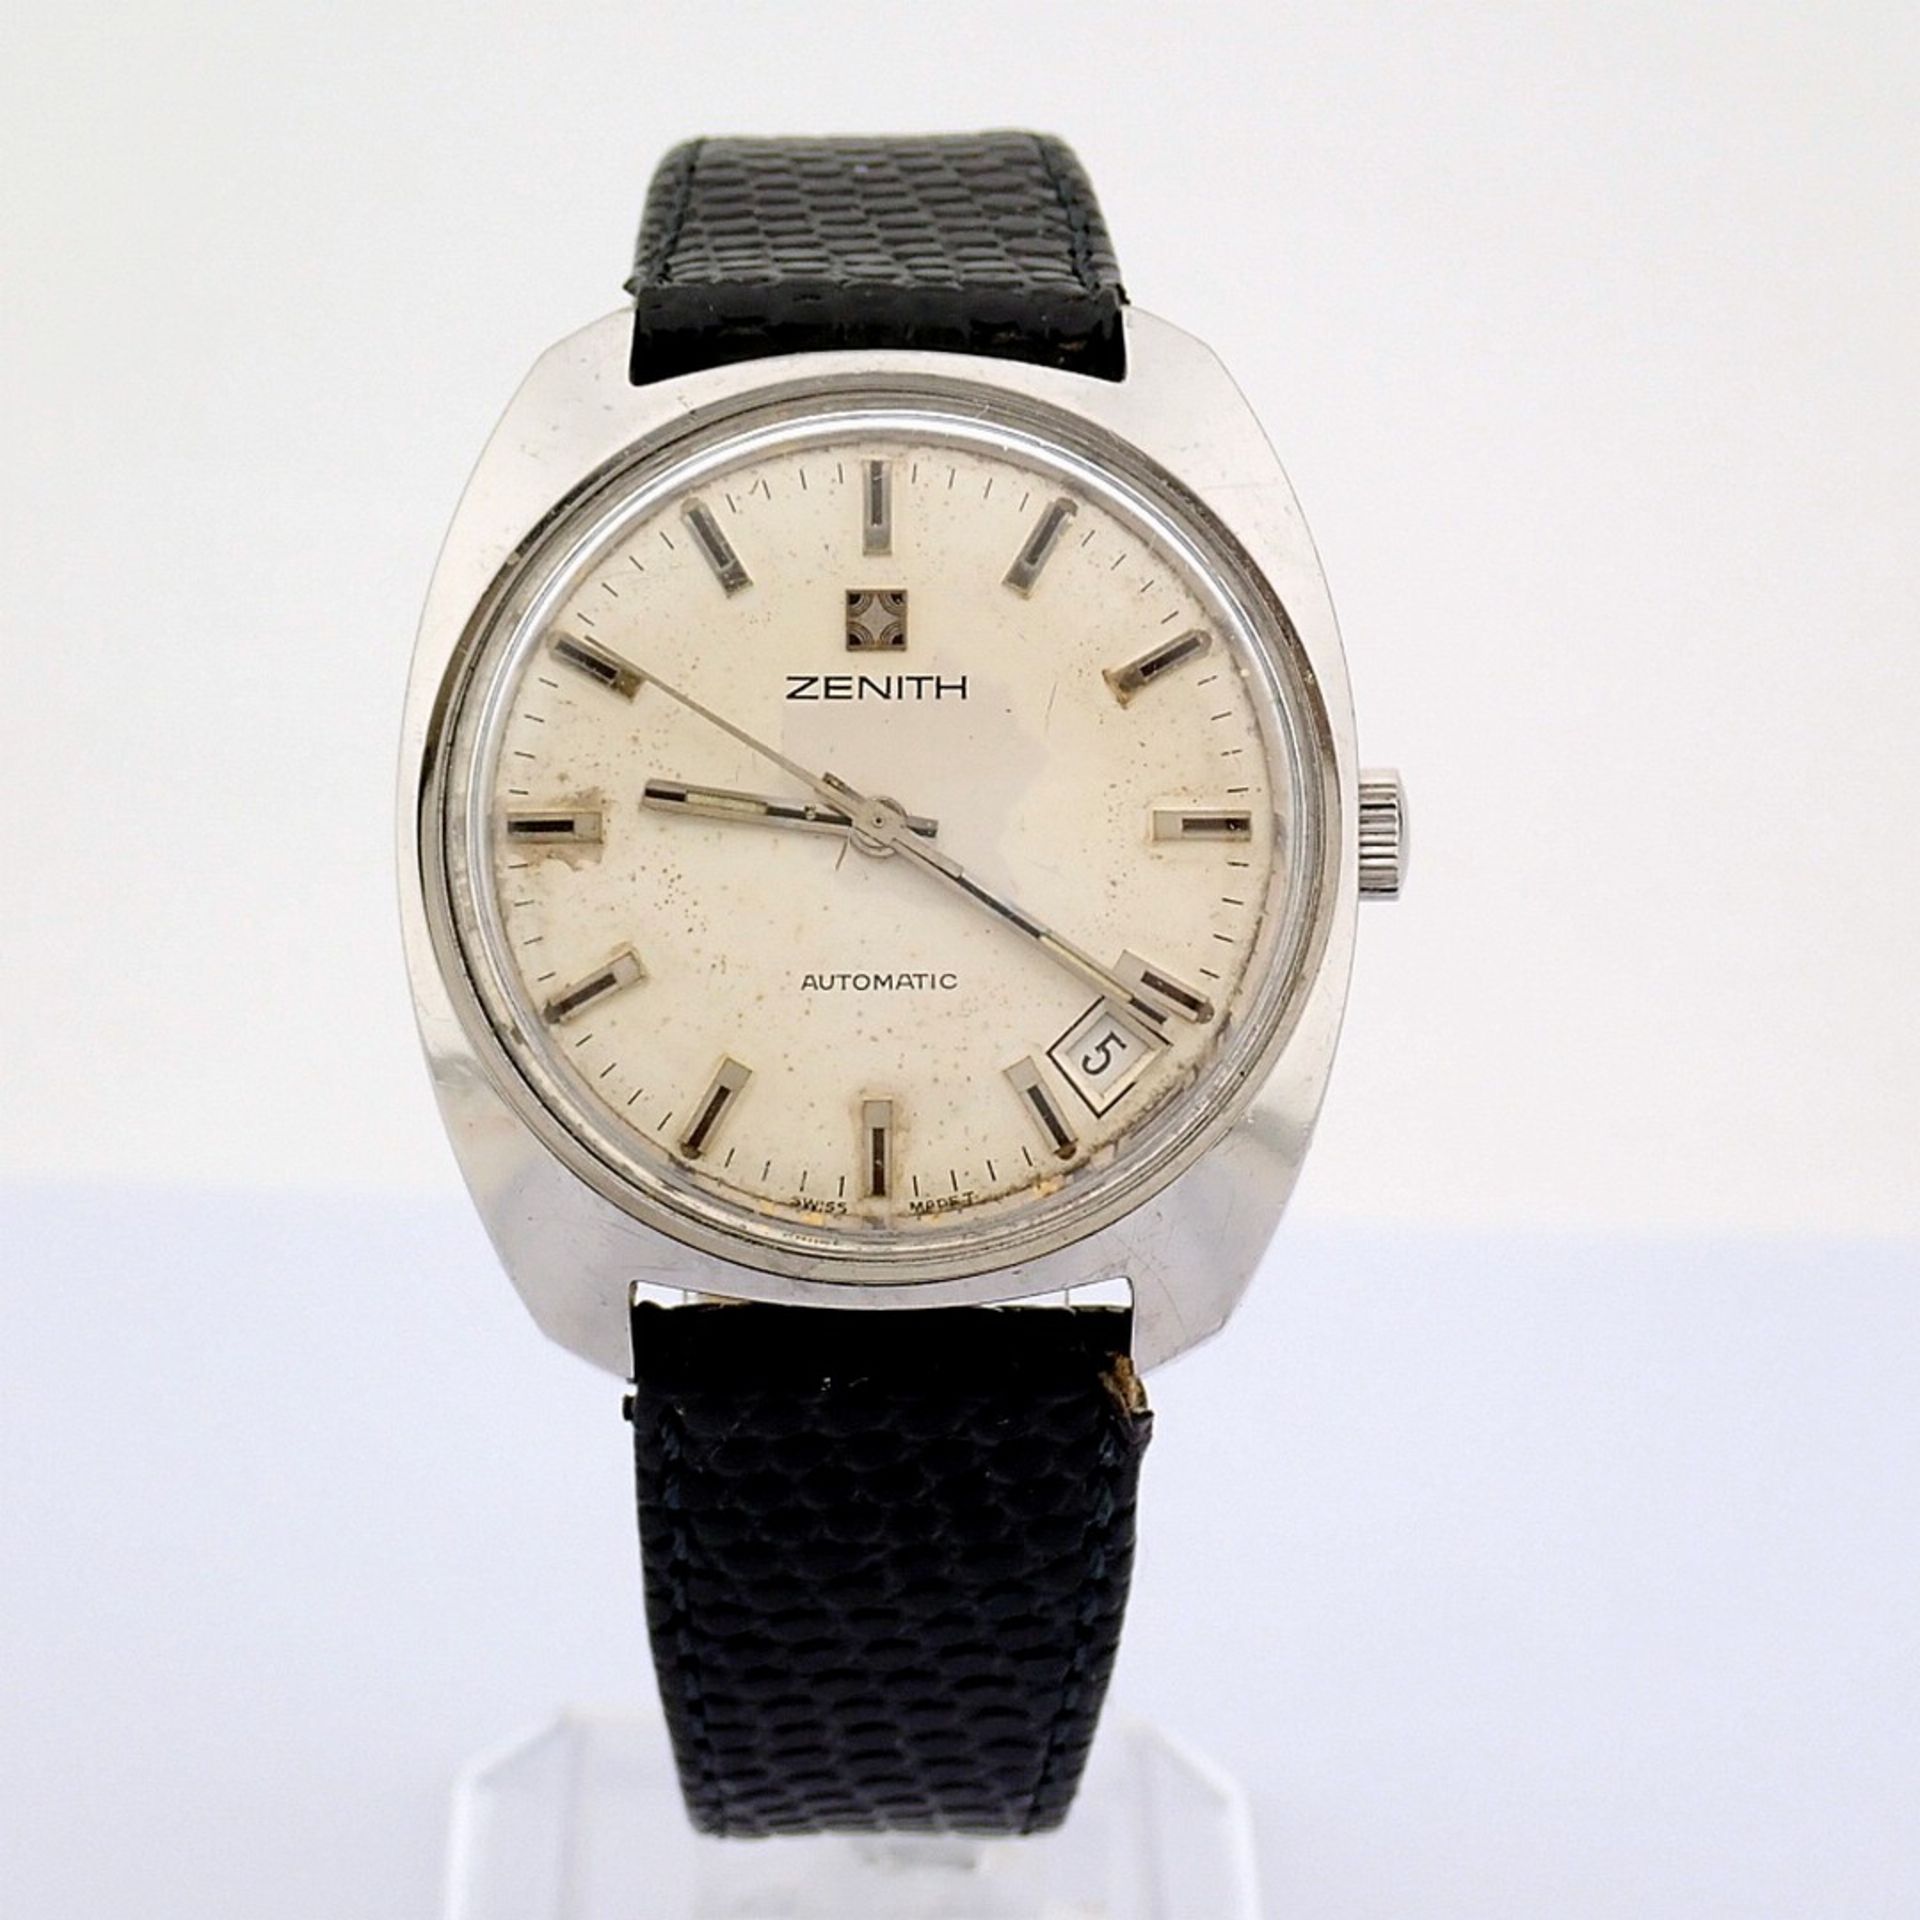 Zenith / Vintage Automatic - Gentlmen's Steel Wrist Watch - Image 9 of 9